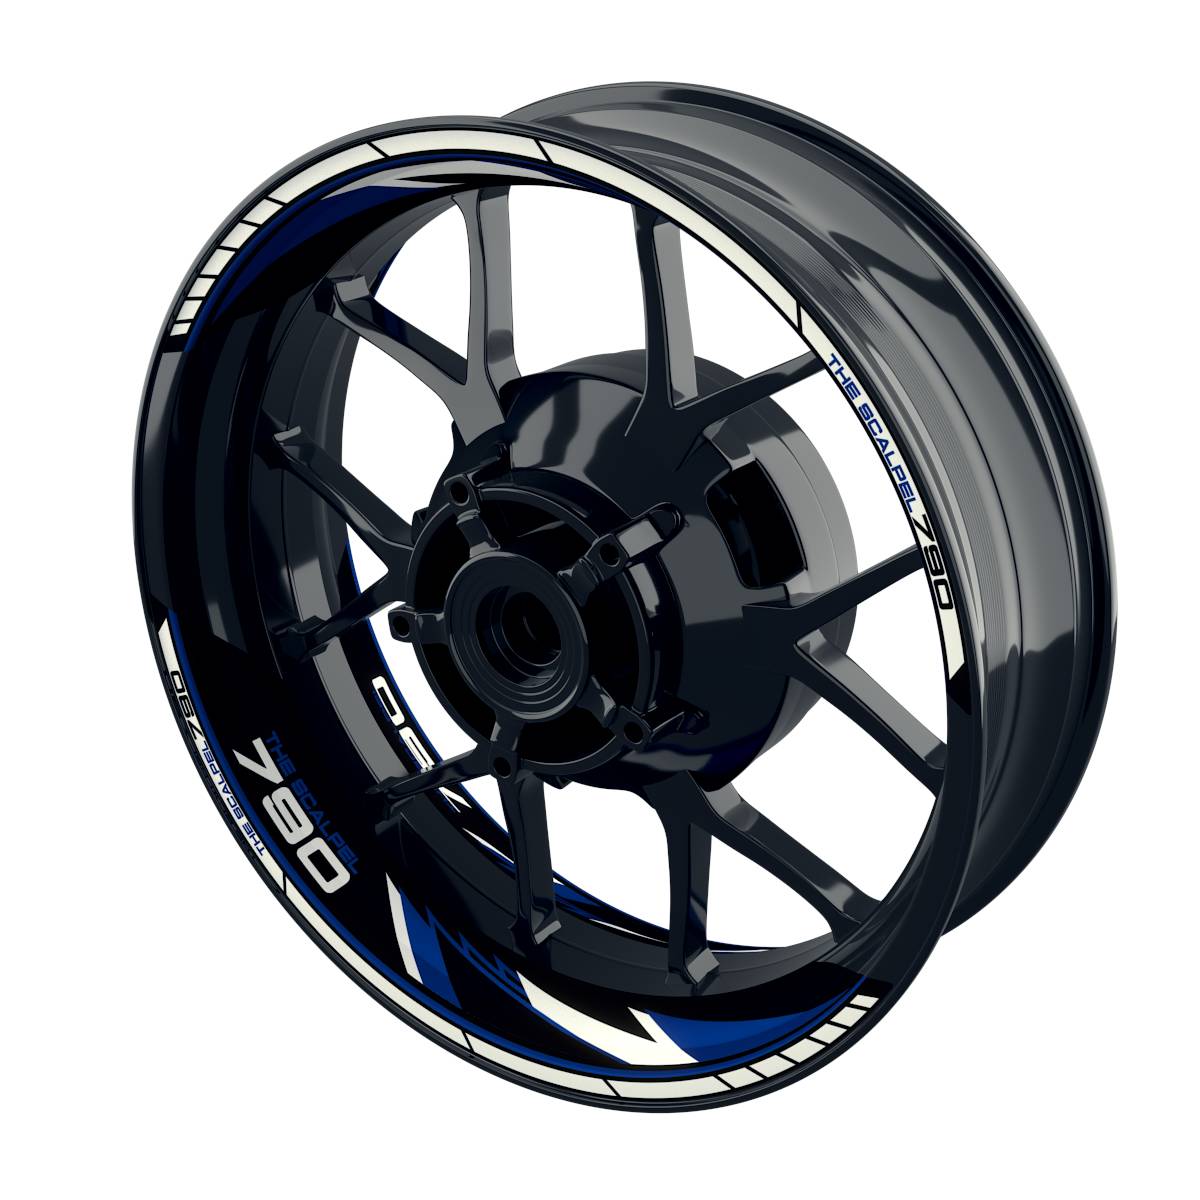 THE SCALPEL 790 Razor Felgenaufkleber Wheelsticker Premium geteilt